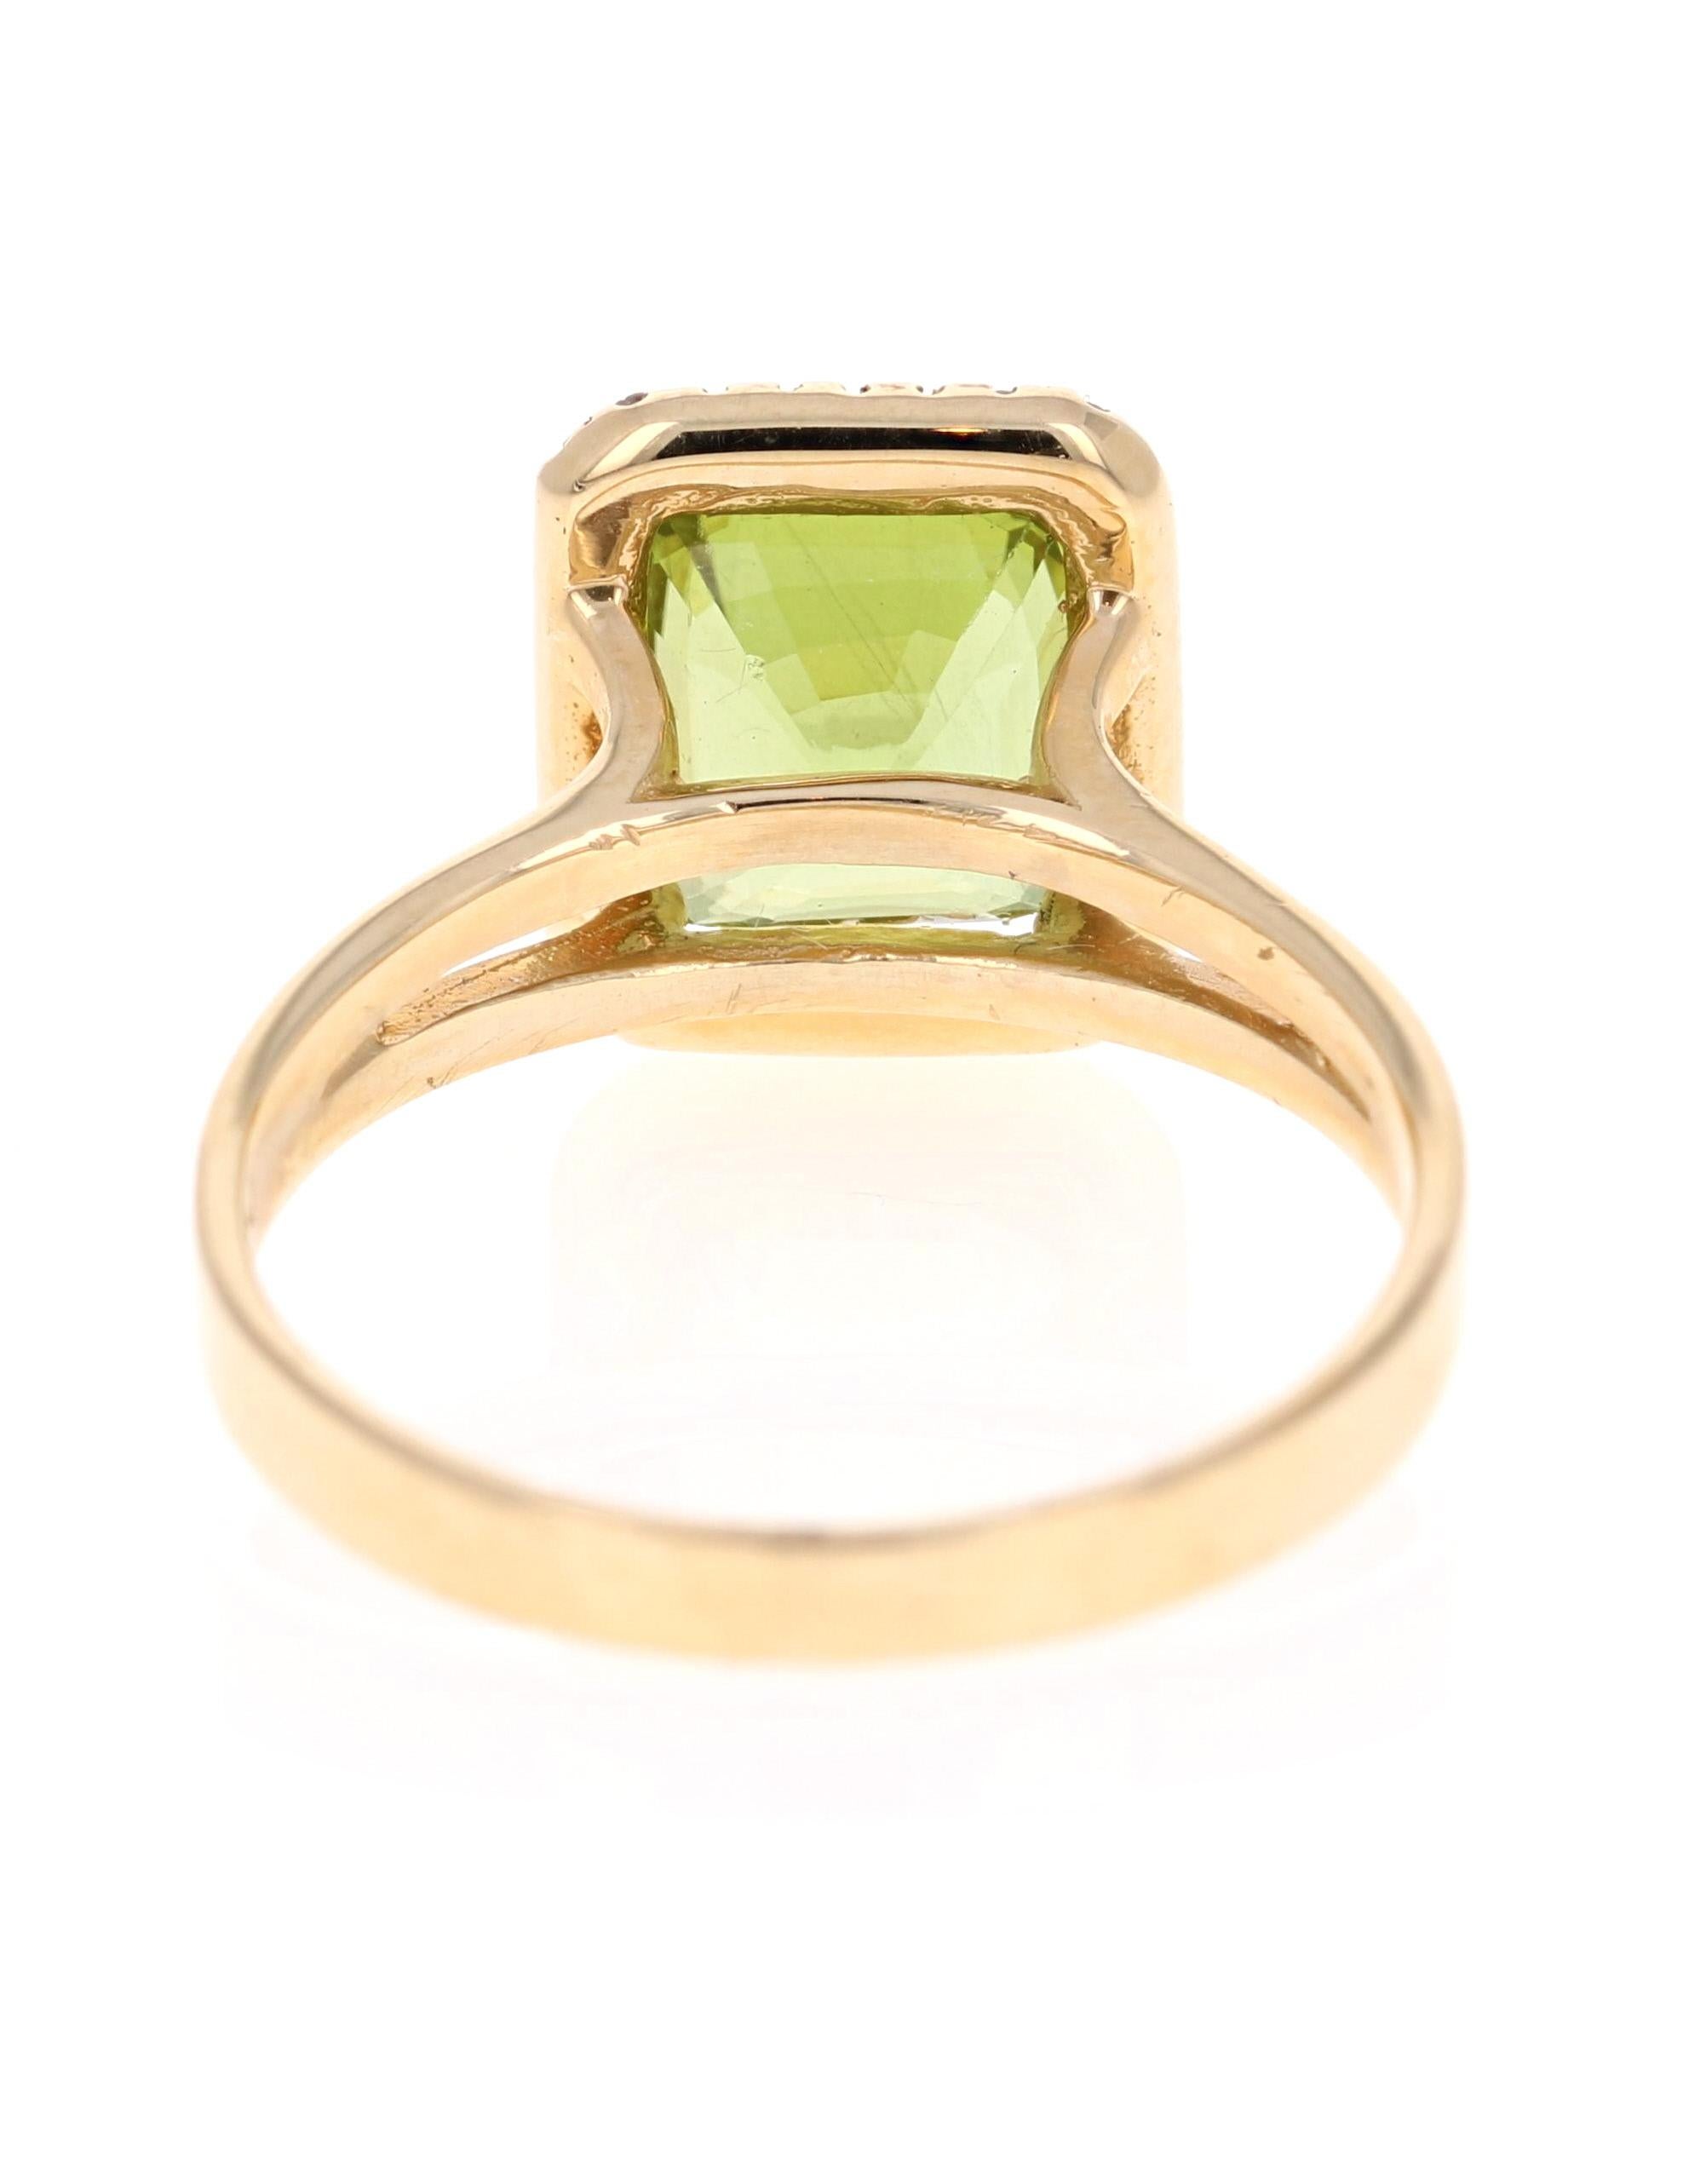 Emerald Cut 3.18 Carat Peridot Diamond 14 Karat Yellow Gold Ring